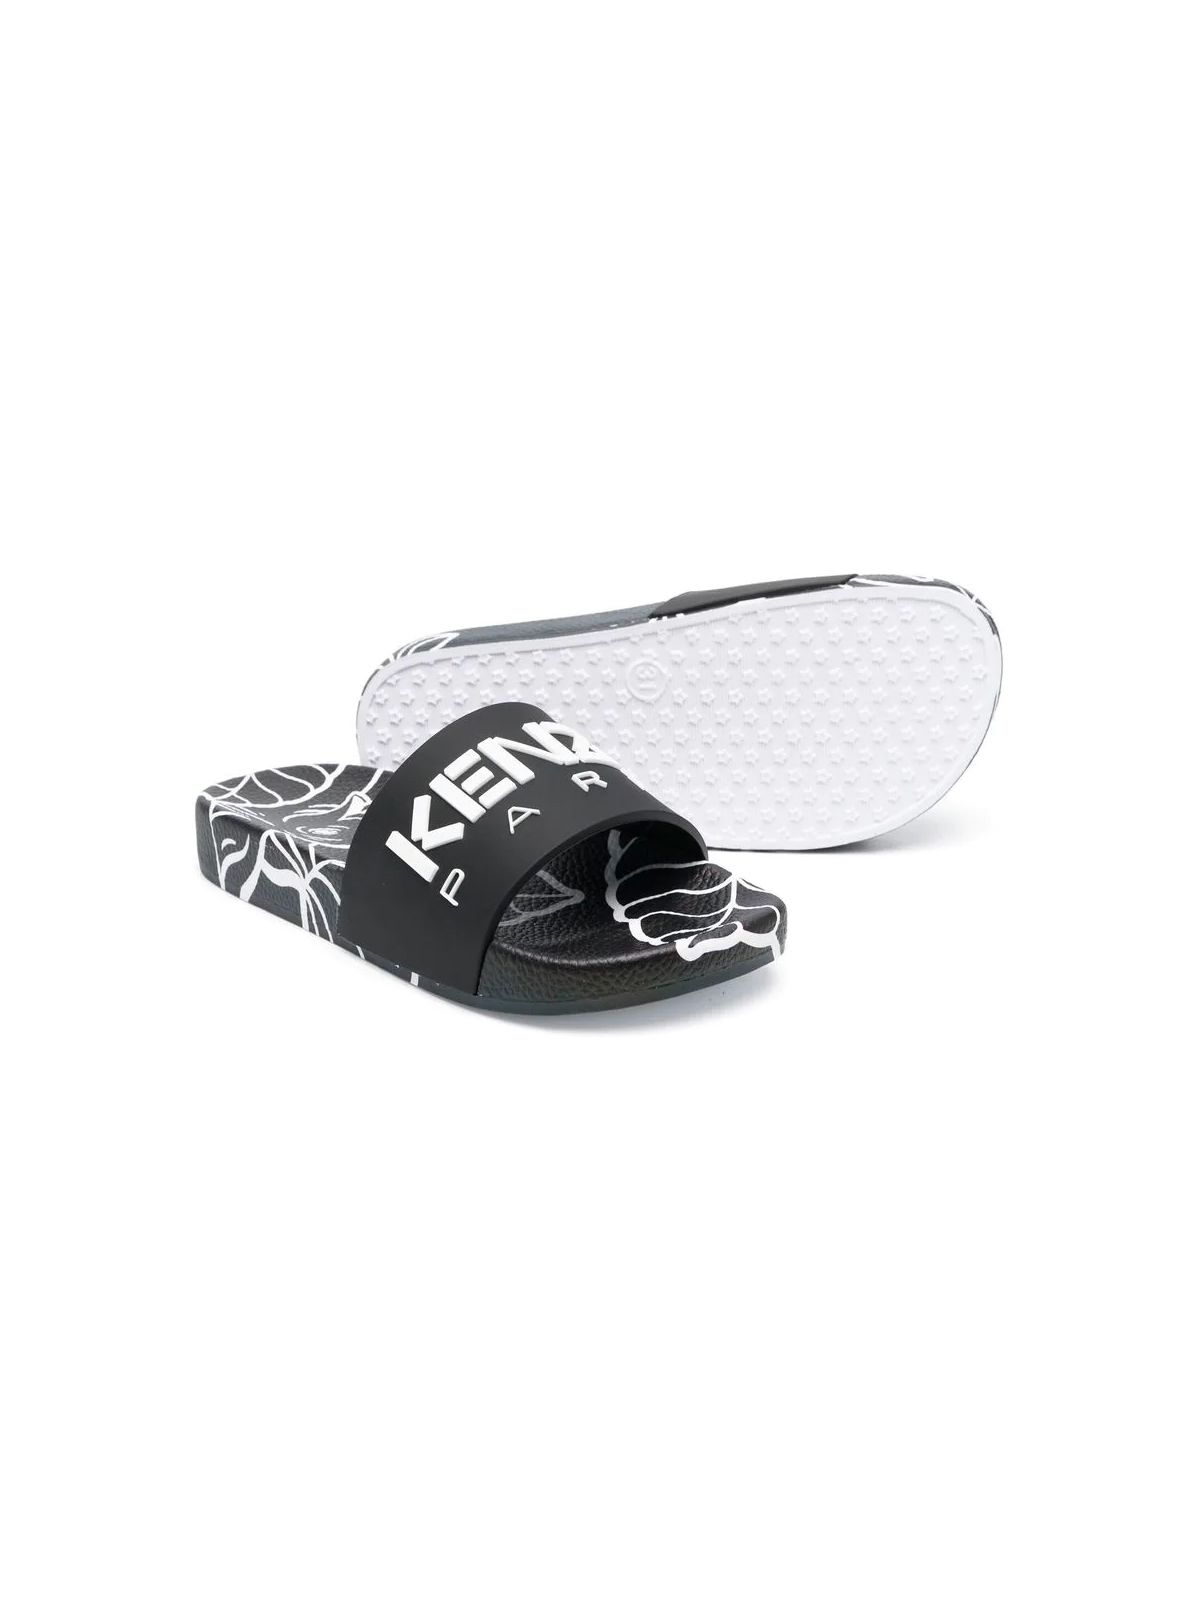 Shop Kenzo Child Sandals: Aqua Slides